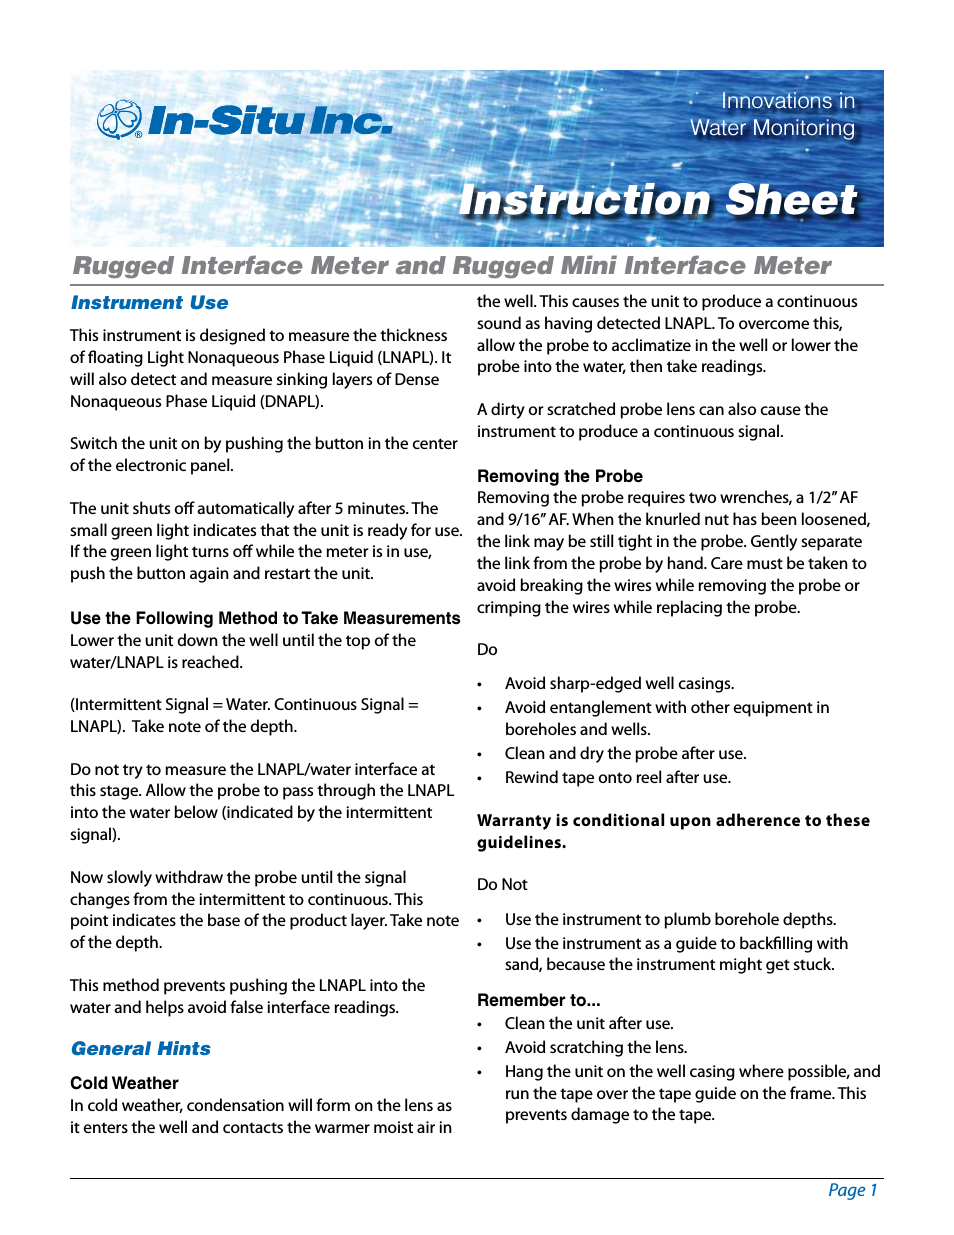 Oil/Water Interface Meter Instruction Sheet